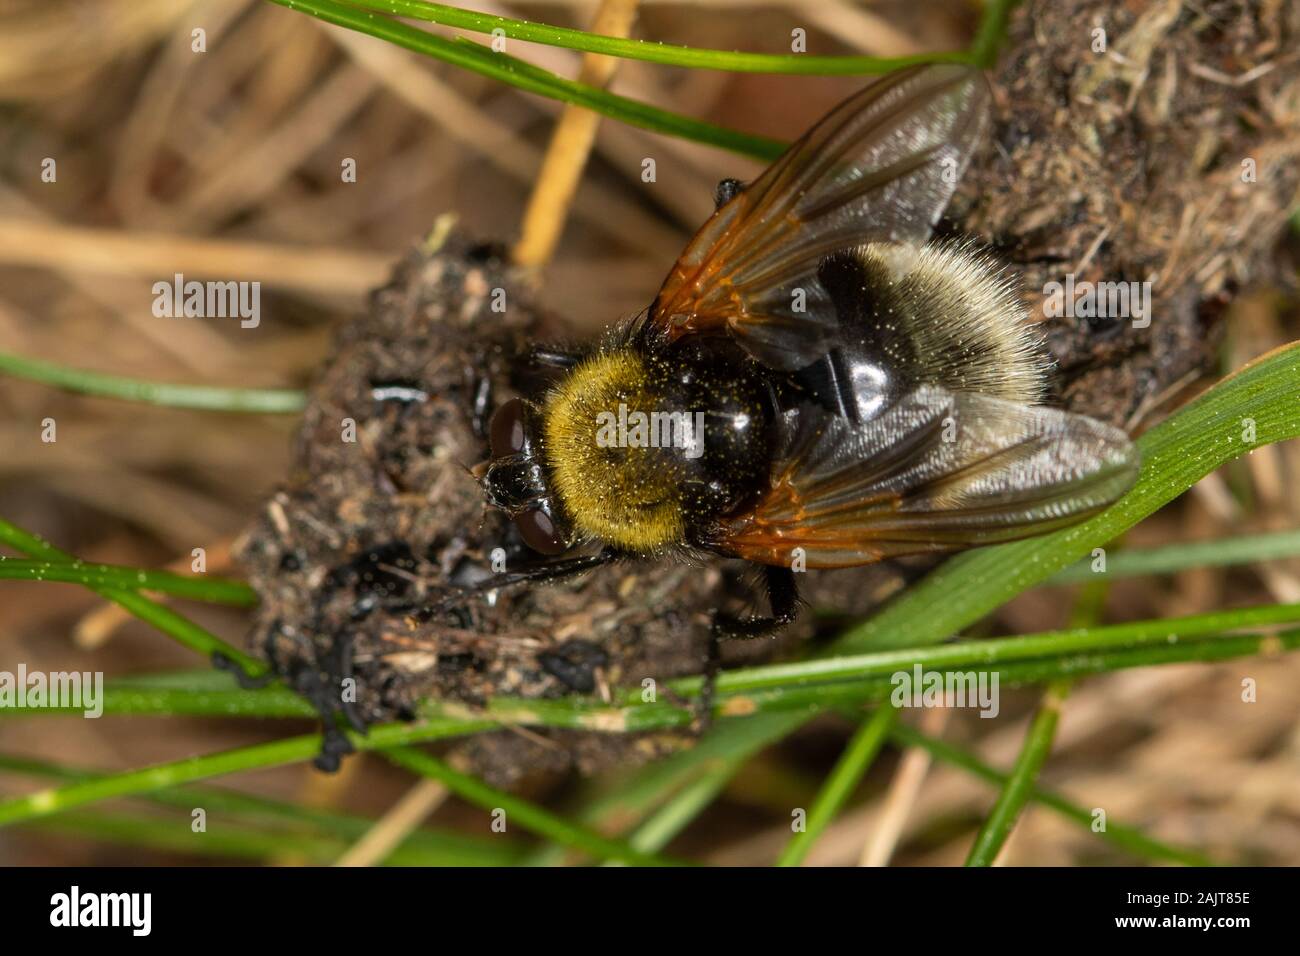 Mesembrina mystacea (Muscidae) feeding on excrement Stock Photo